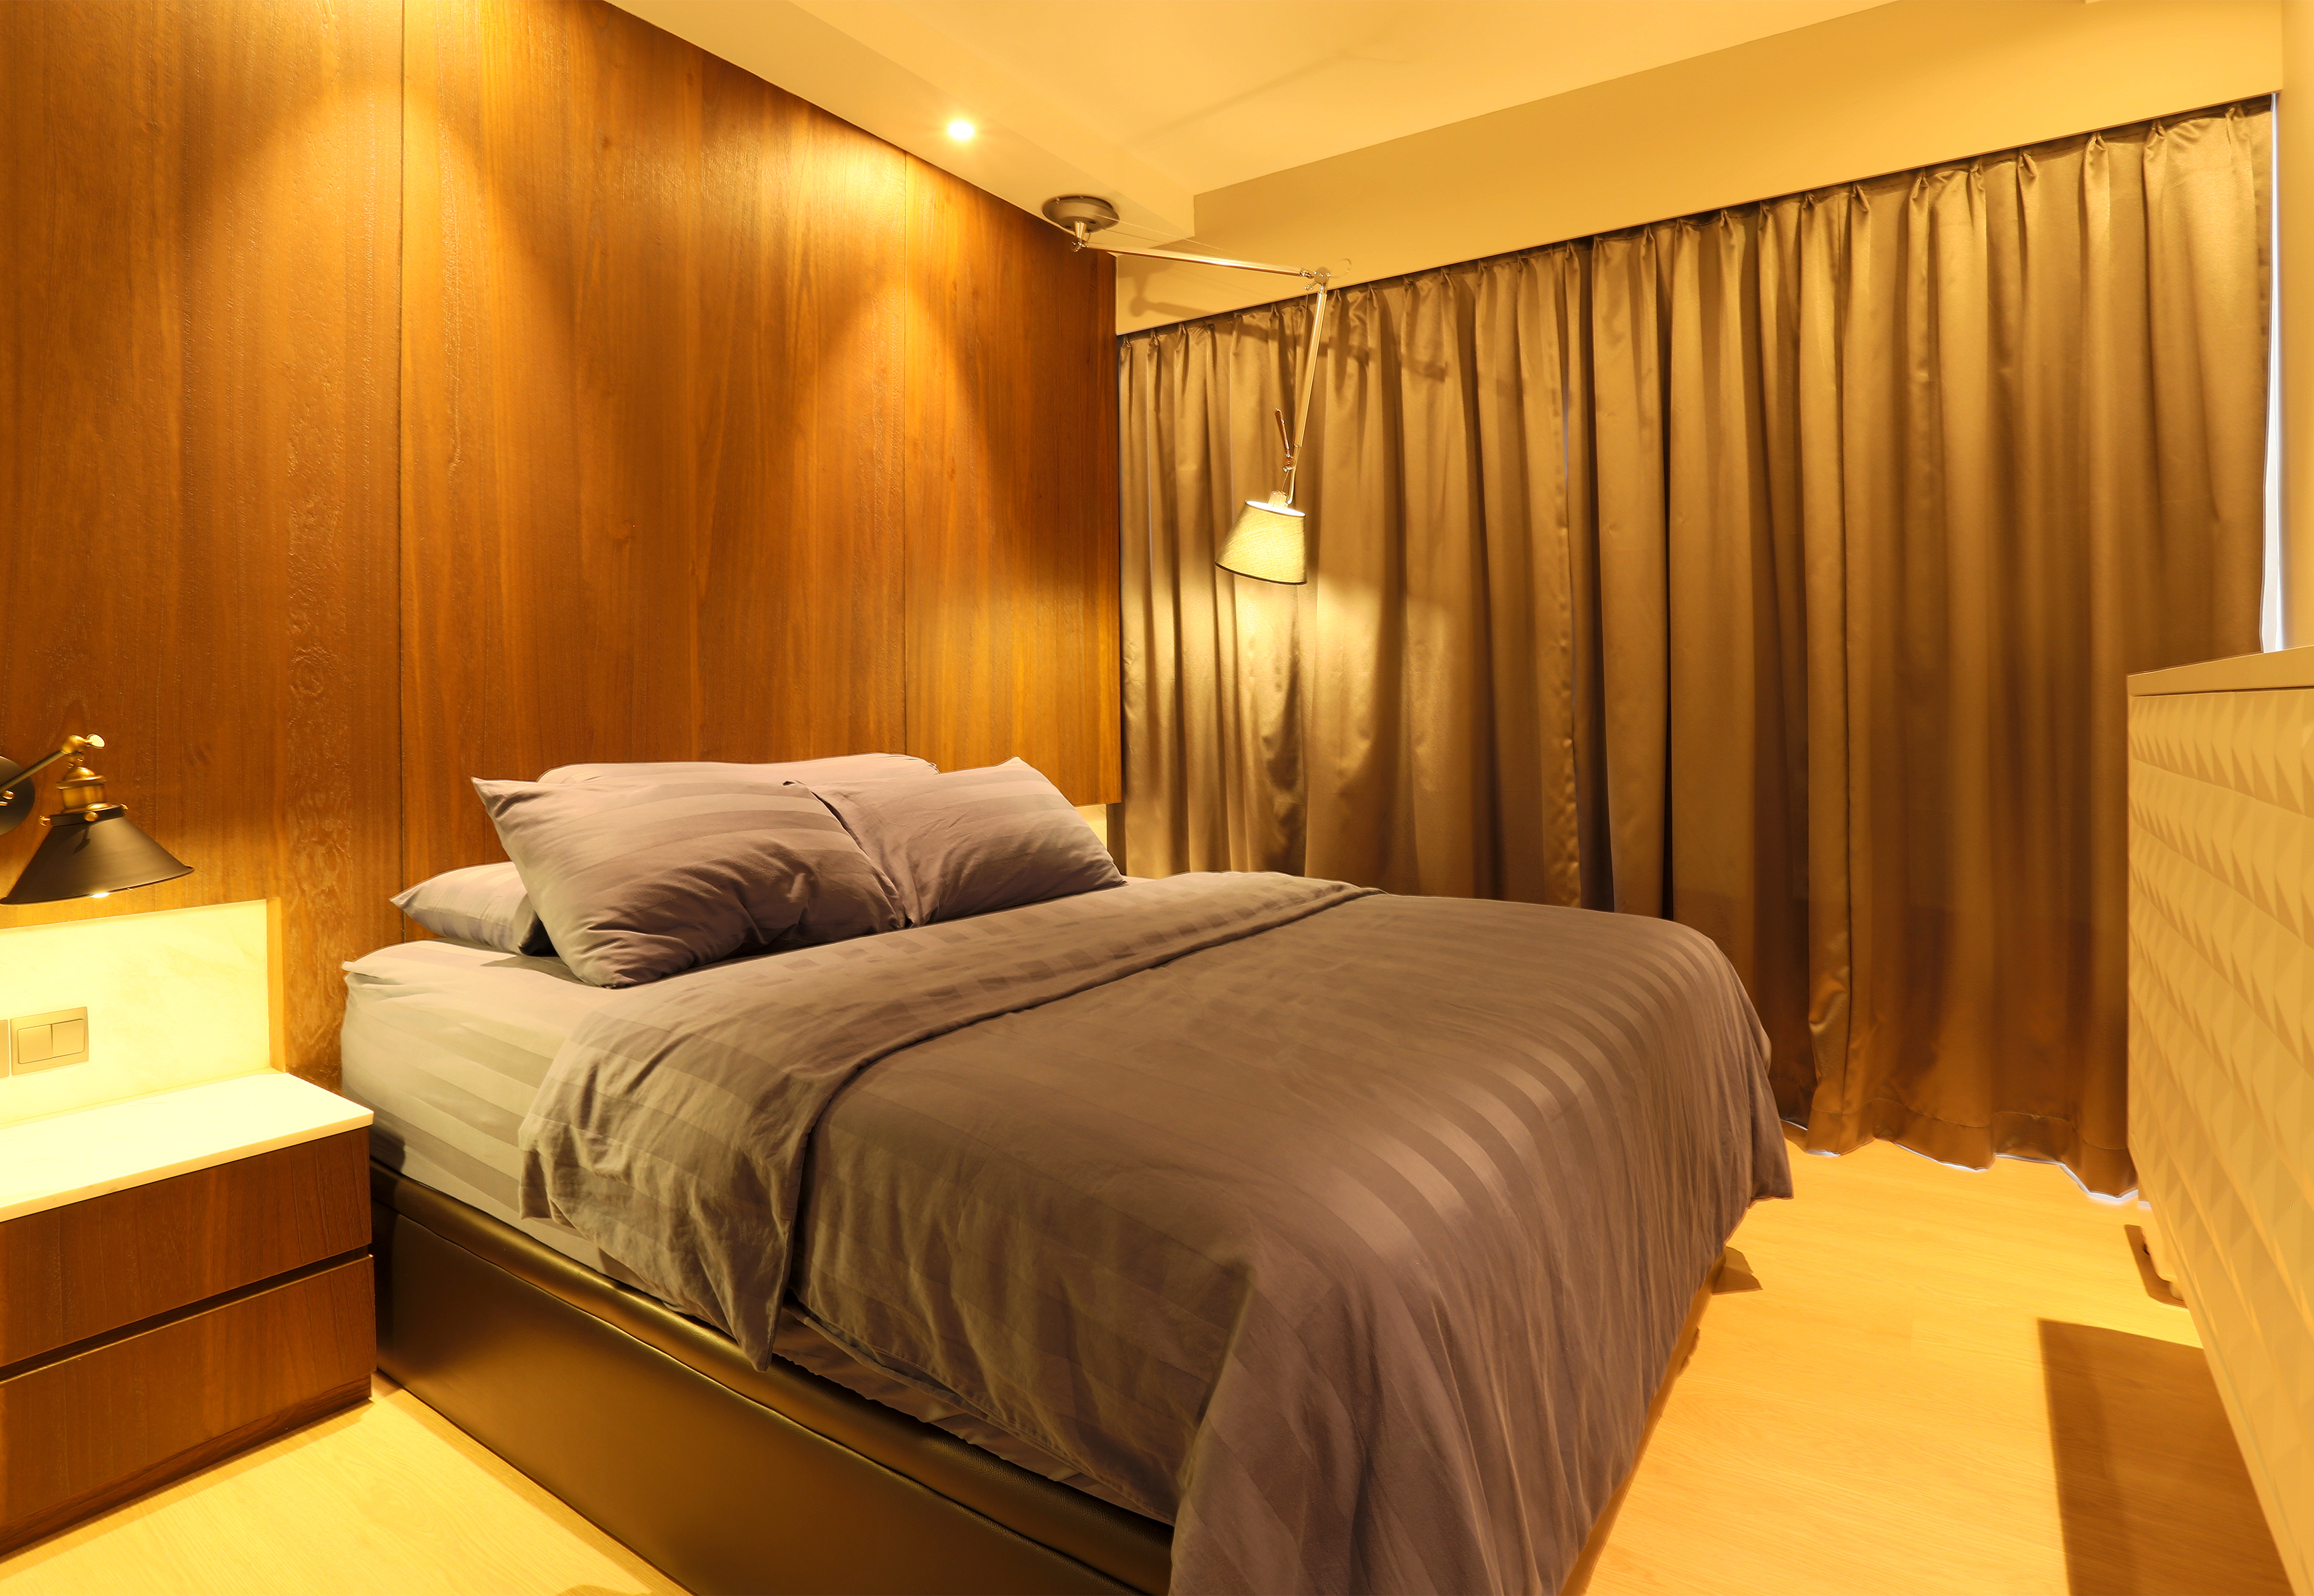 Country, Modern Design - Bedroom - Condominium - Design by United Team Lifestyle